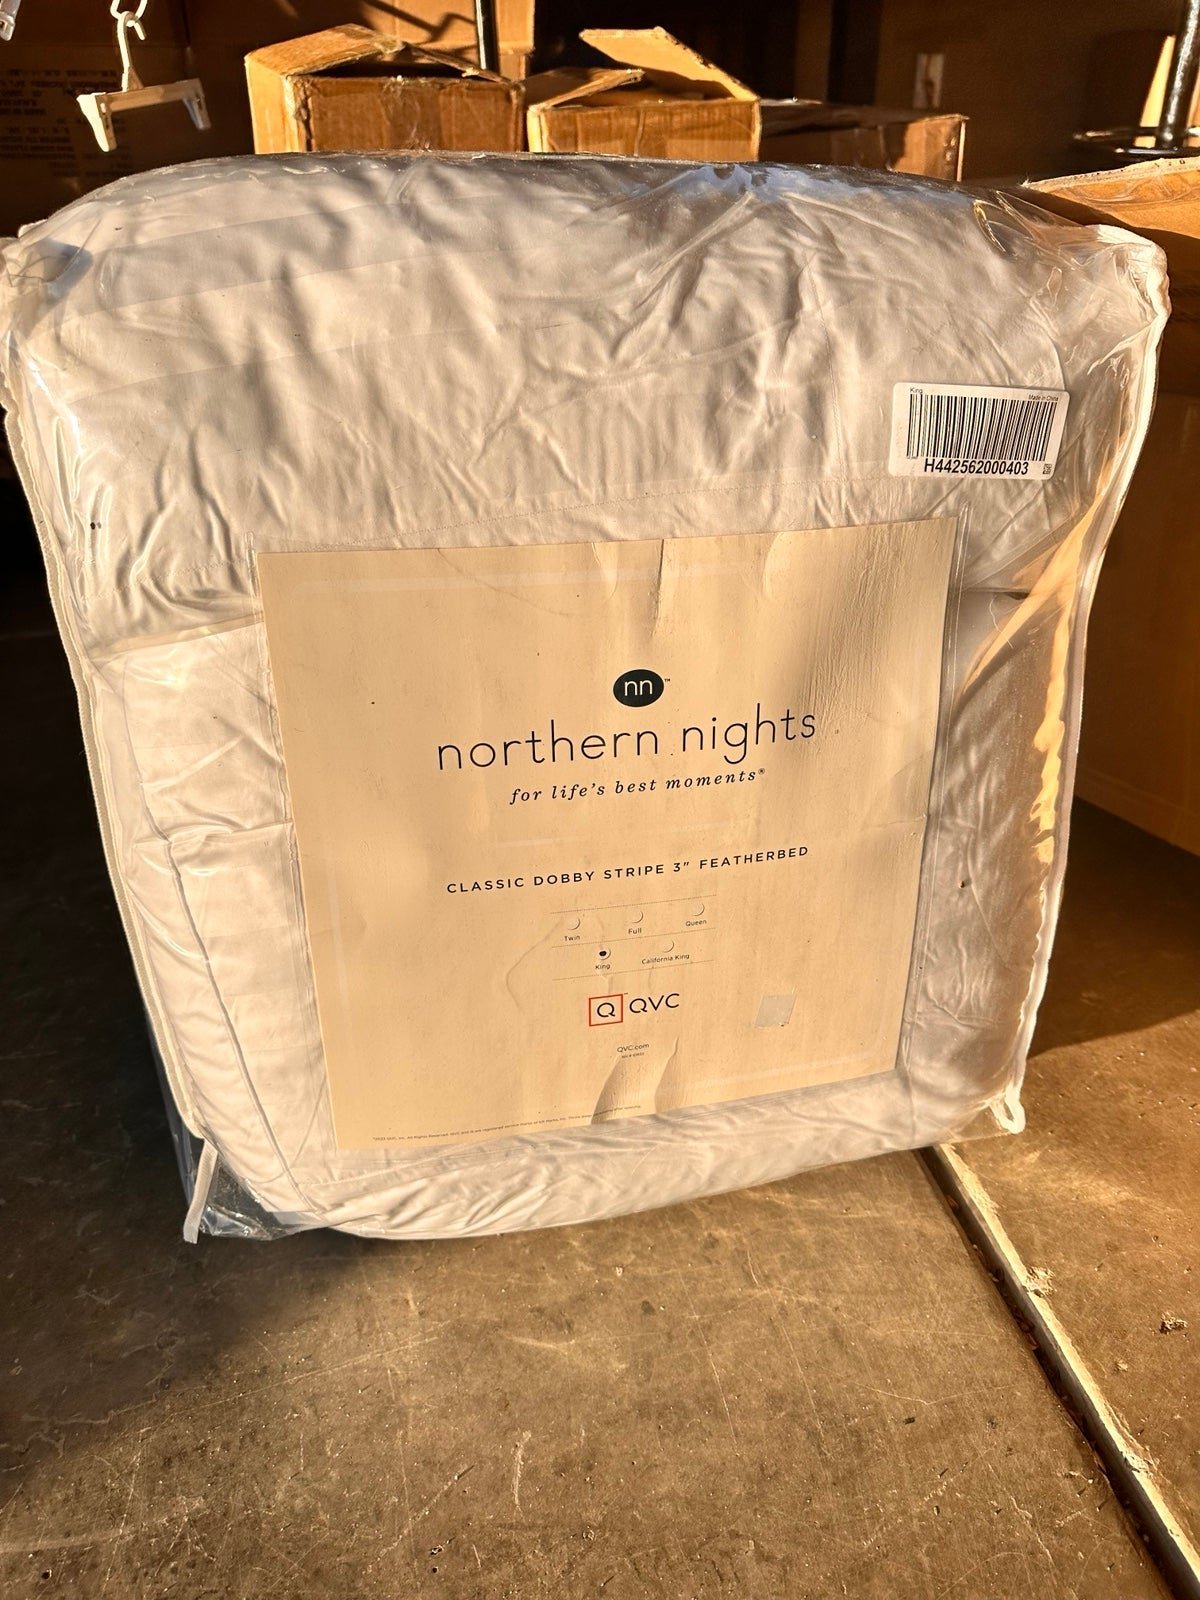 Northern nights classic dobby stripe 3” festherbed e53EgRigq